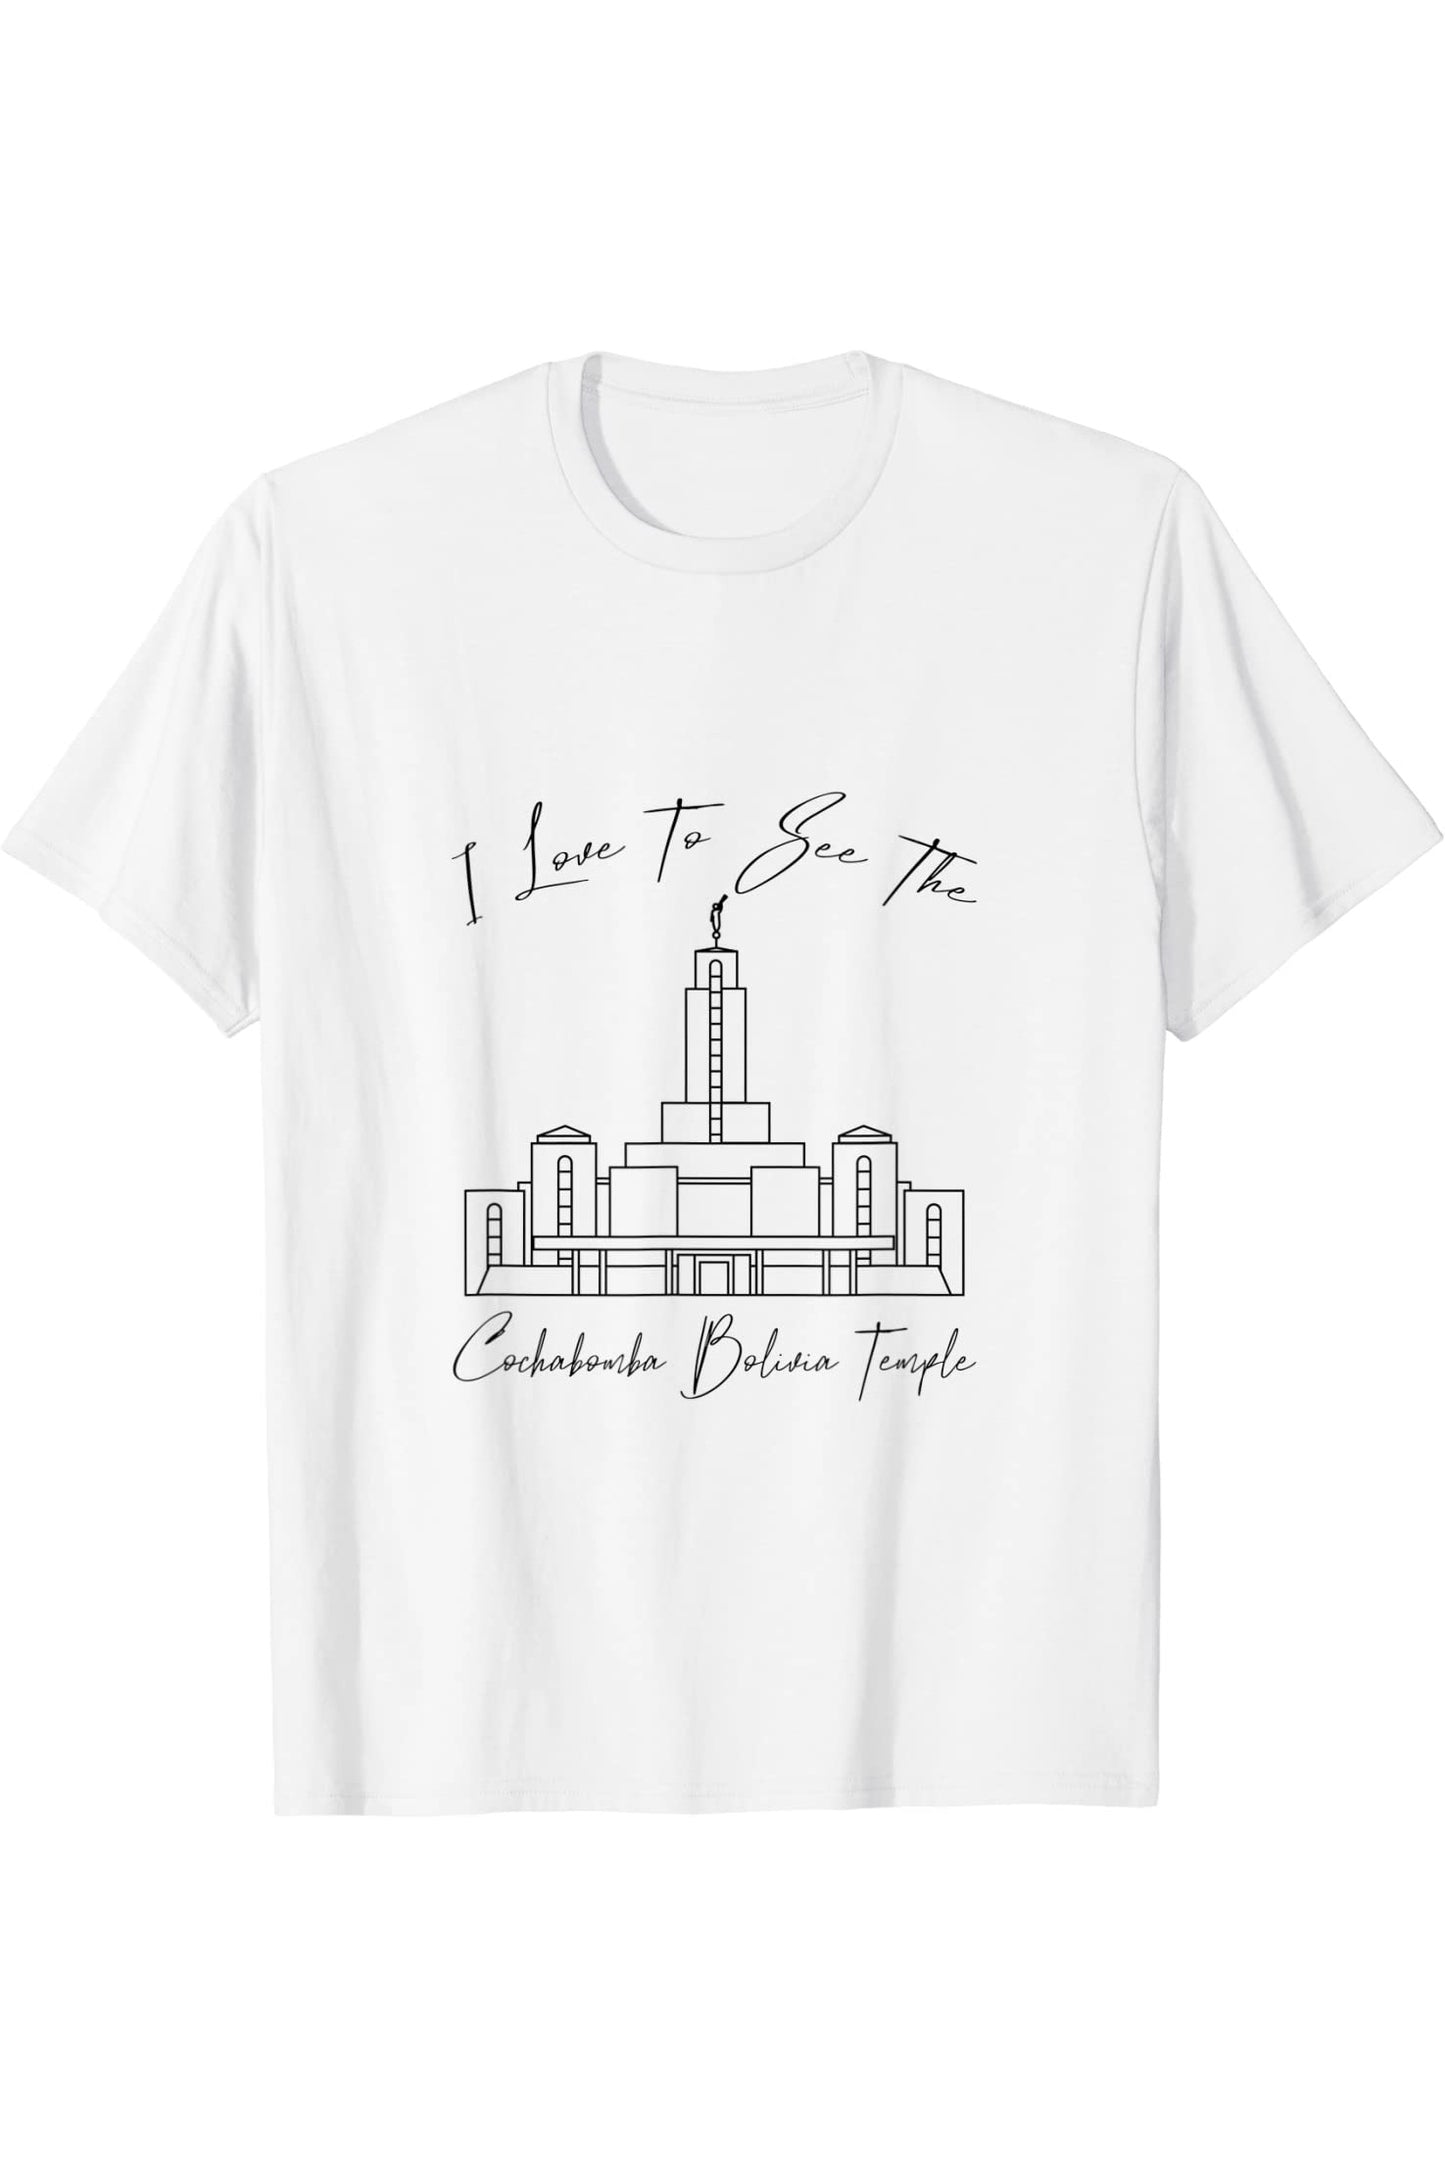 Cochabamba Bolivia Temple T-Shirt - Calligraphy Style (English) US